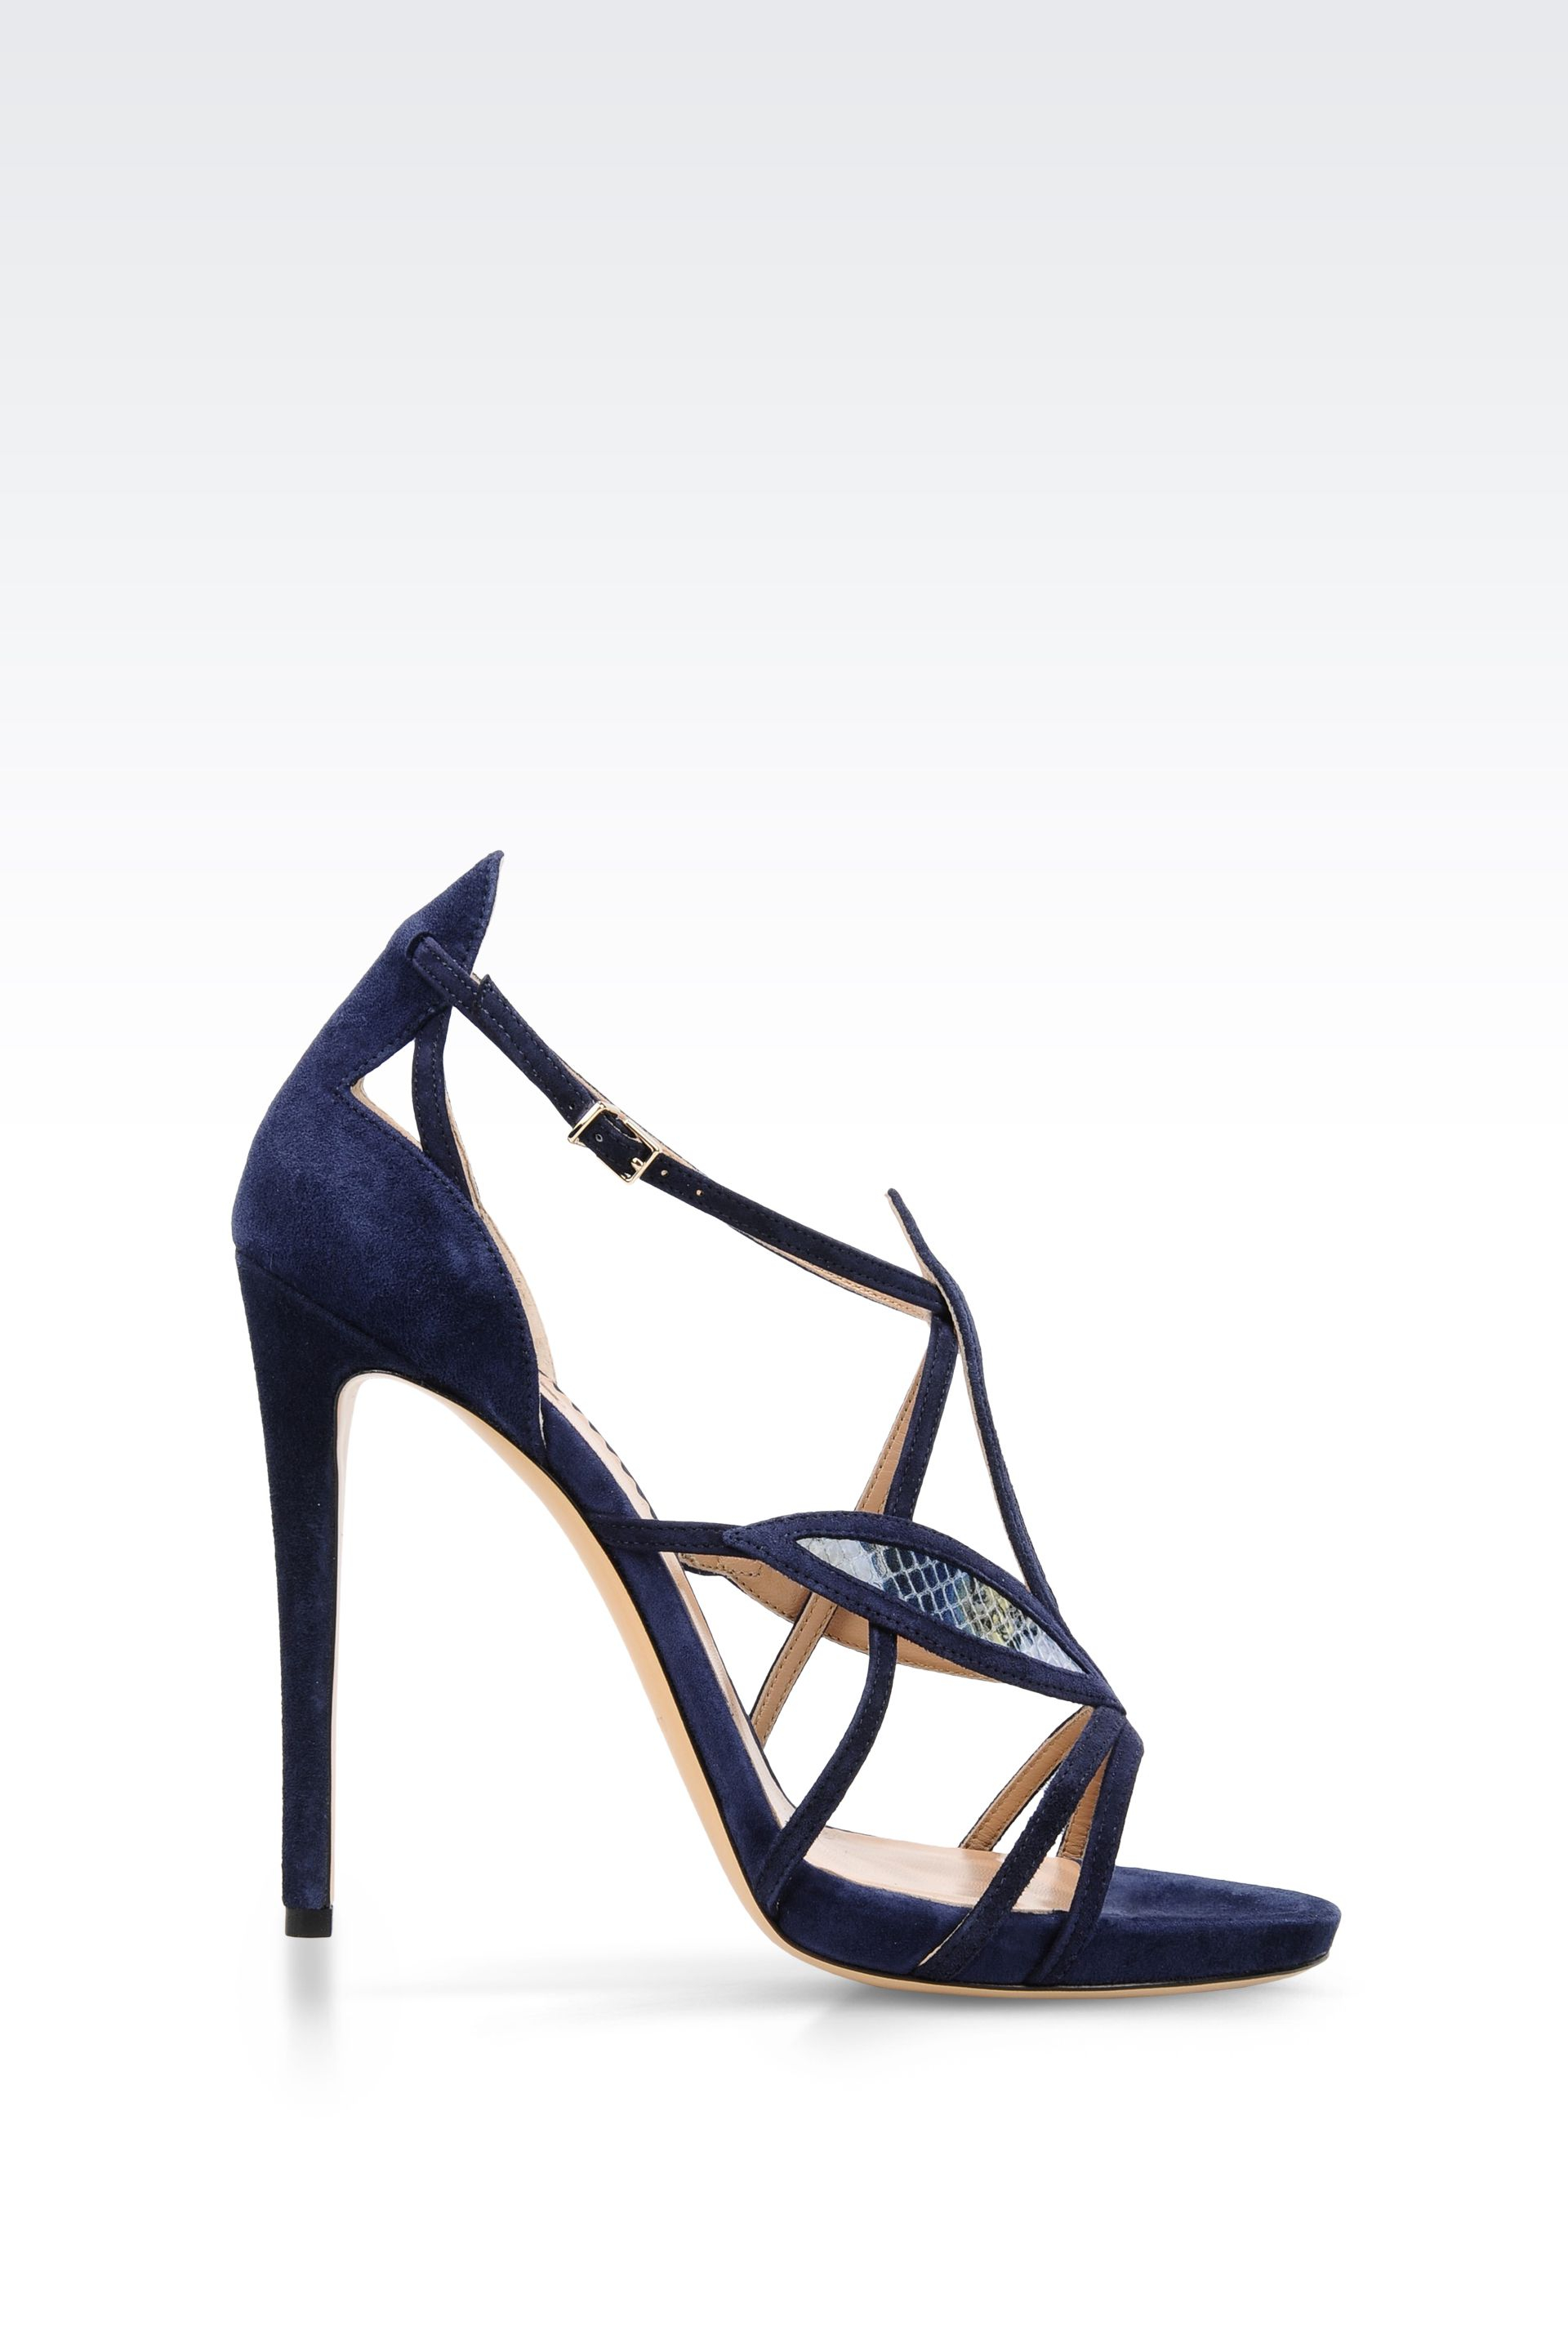 Lyst - Emporio Armani Highheeled Sandals in Blue